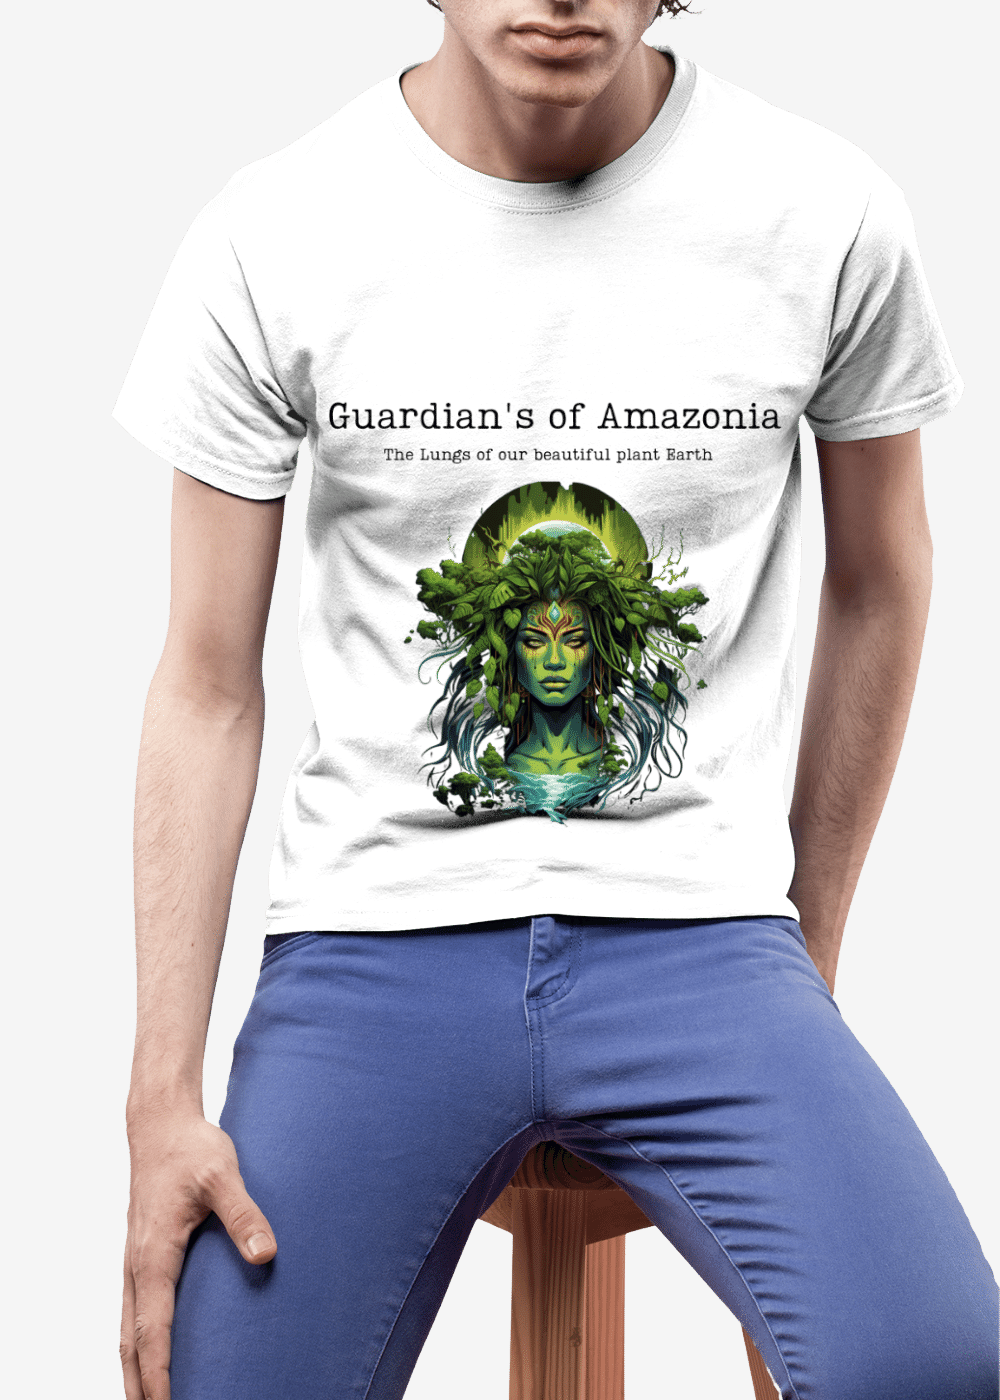 Nature Lover T Shirt for Men - Amazon Rain Forest